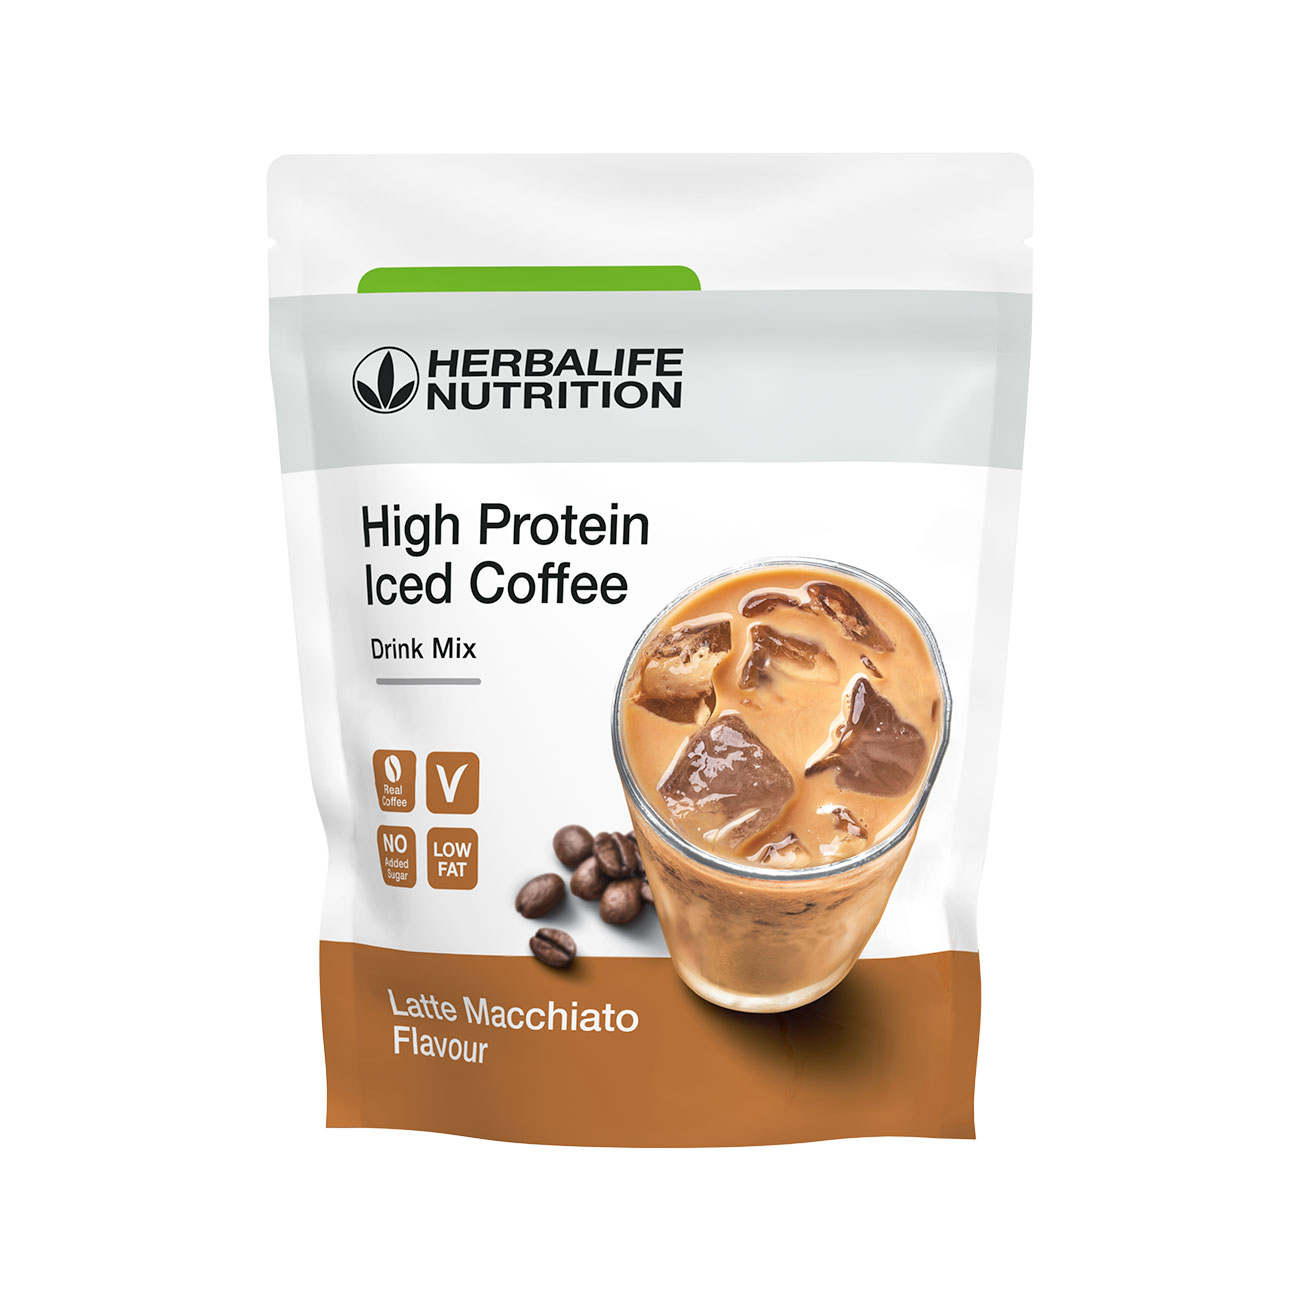 High Protein Iced Coffee  Γεύση Latte Macchiato product shot